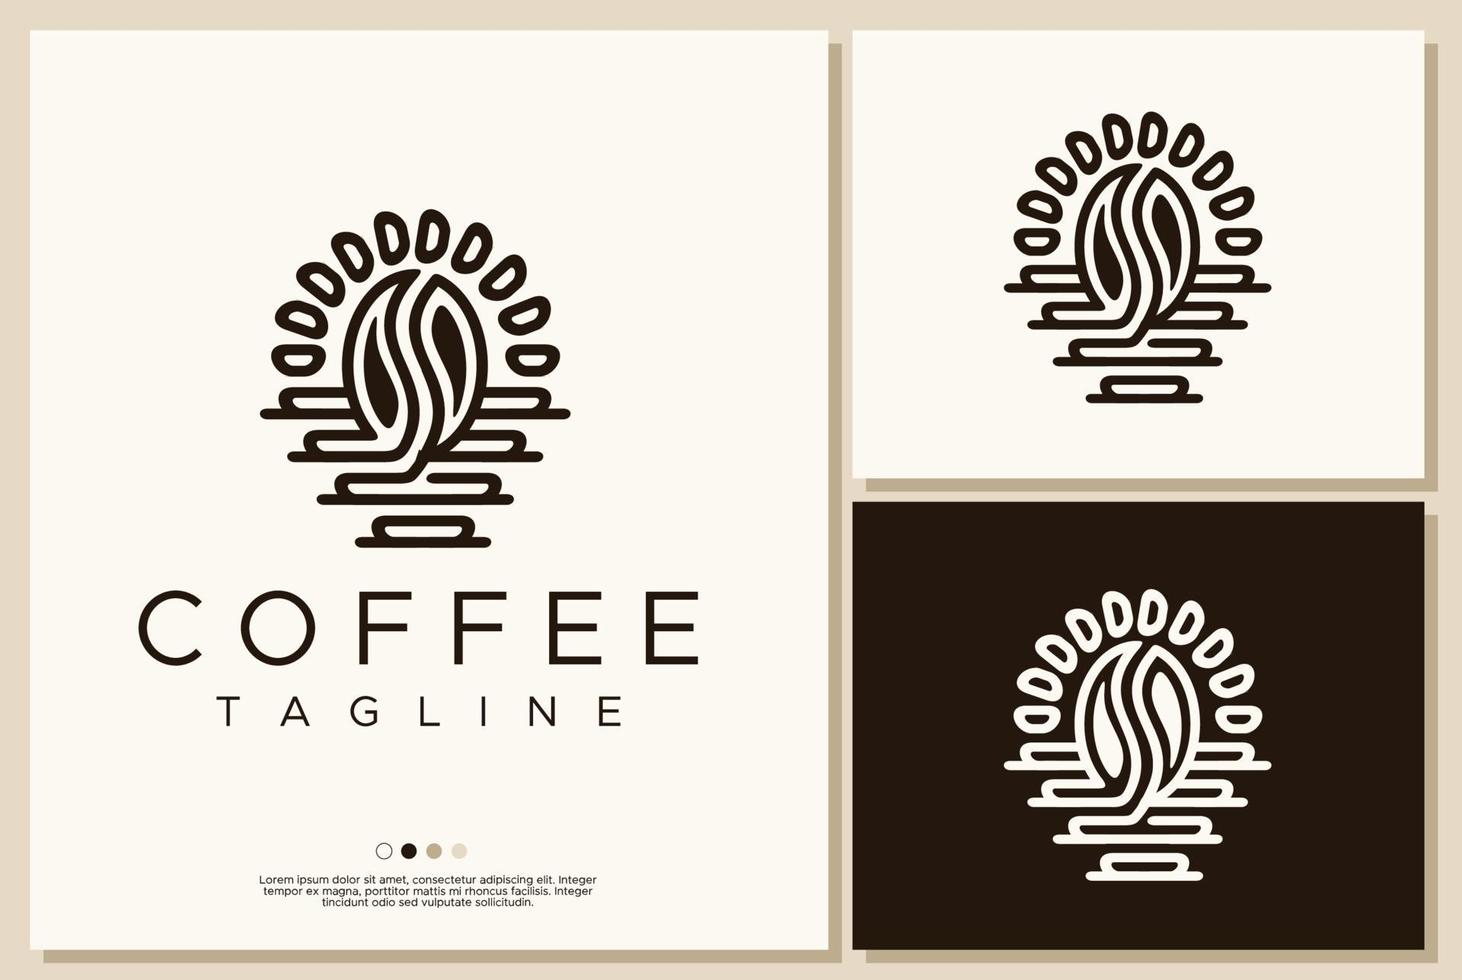 création de logo de grain de café minimaliste. logo de grain de café en dessin au trait. vecteur